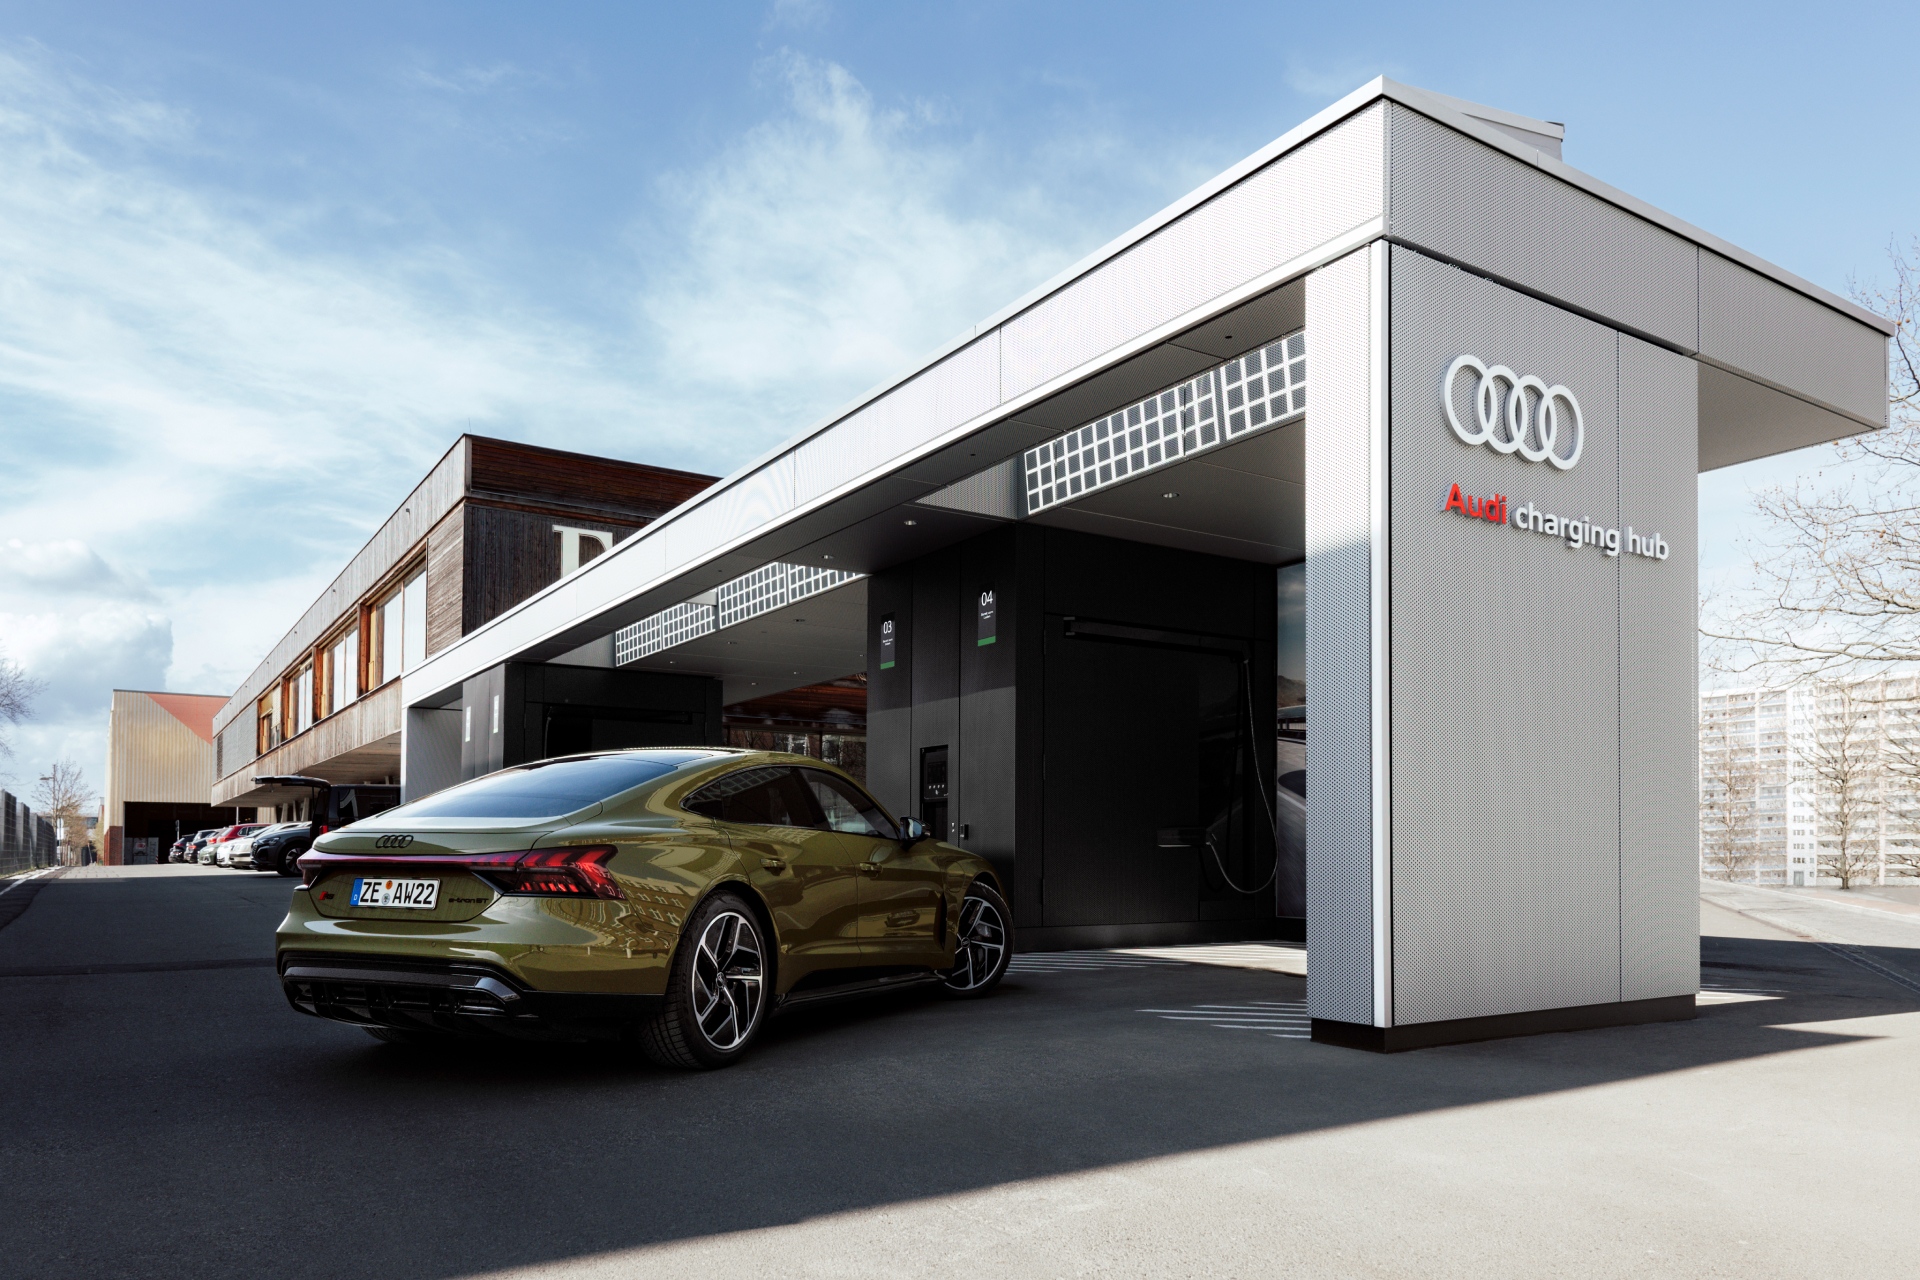 The Audi charging hubs